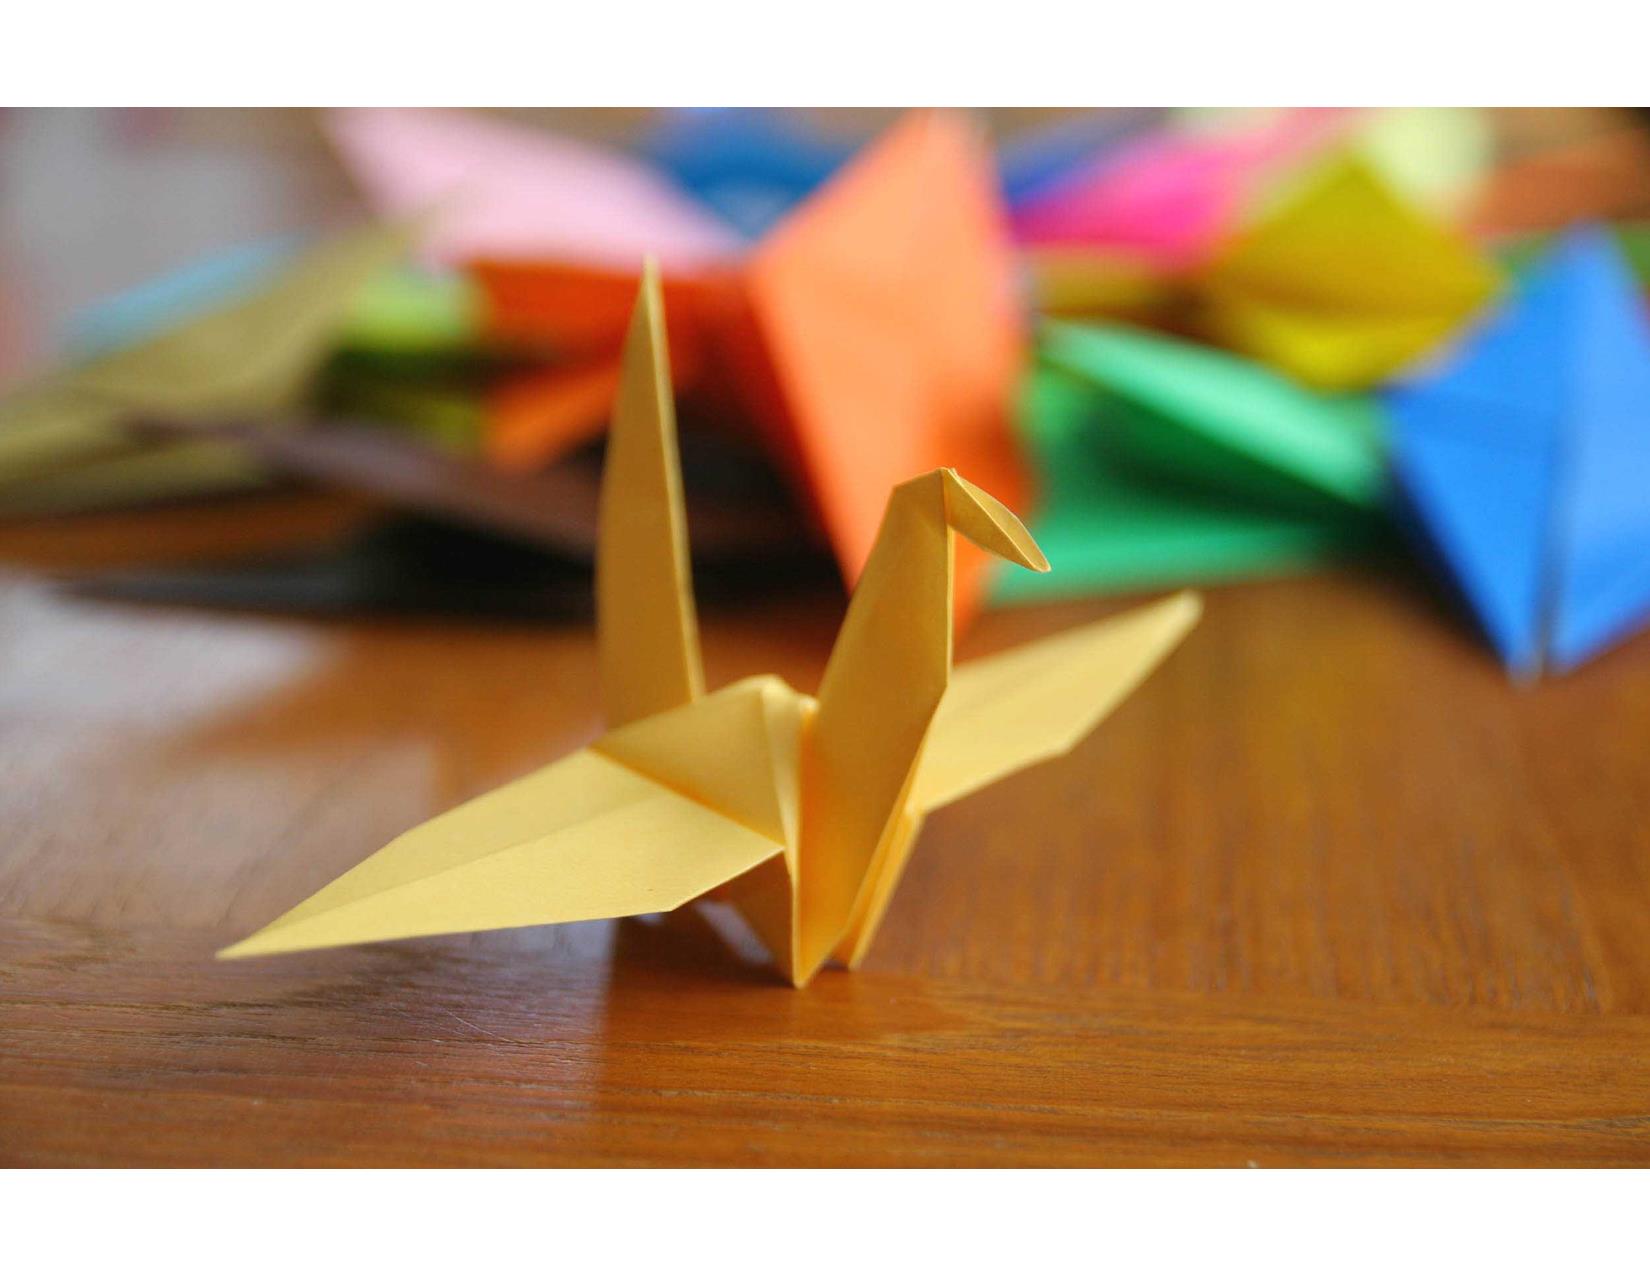 In Japan, Teenage Girls Folding Paper Cranes Has Taken on 